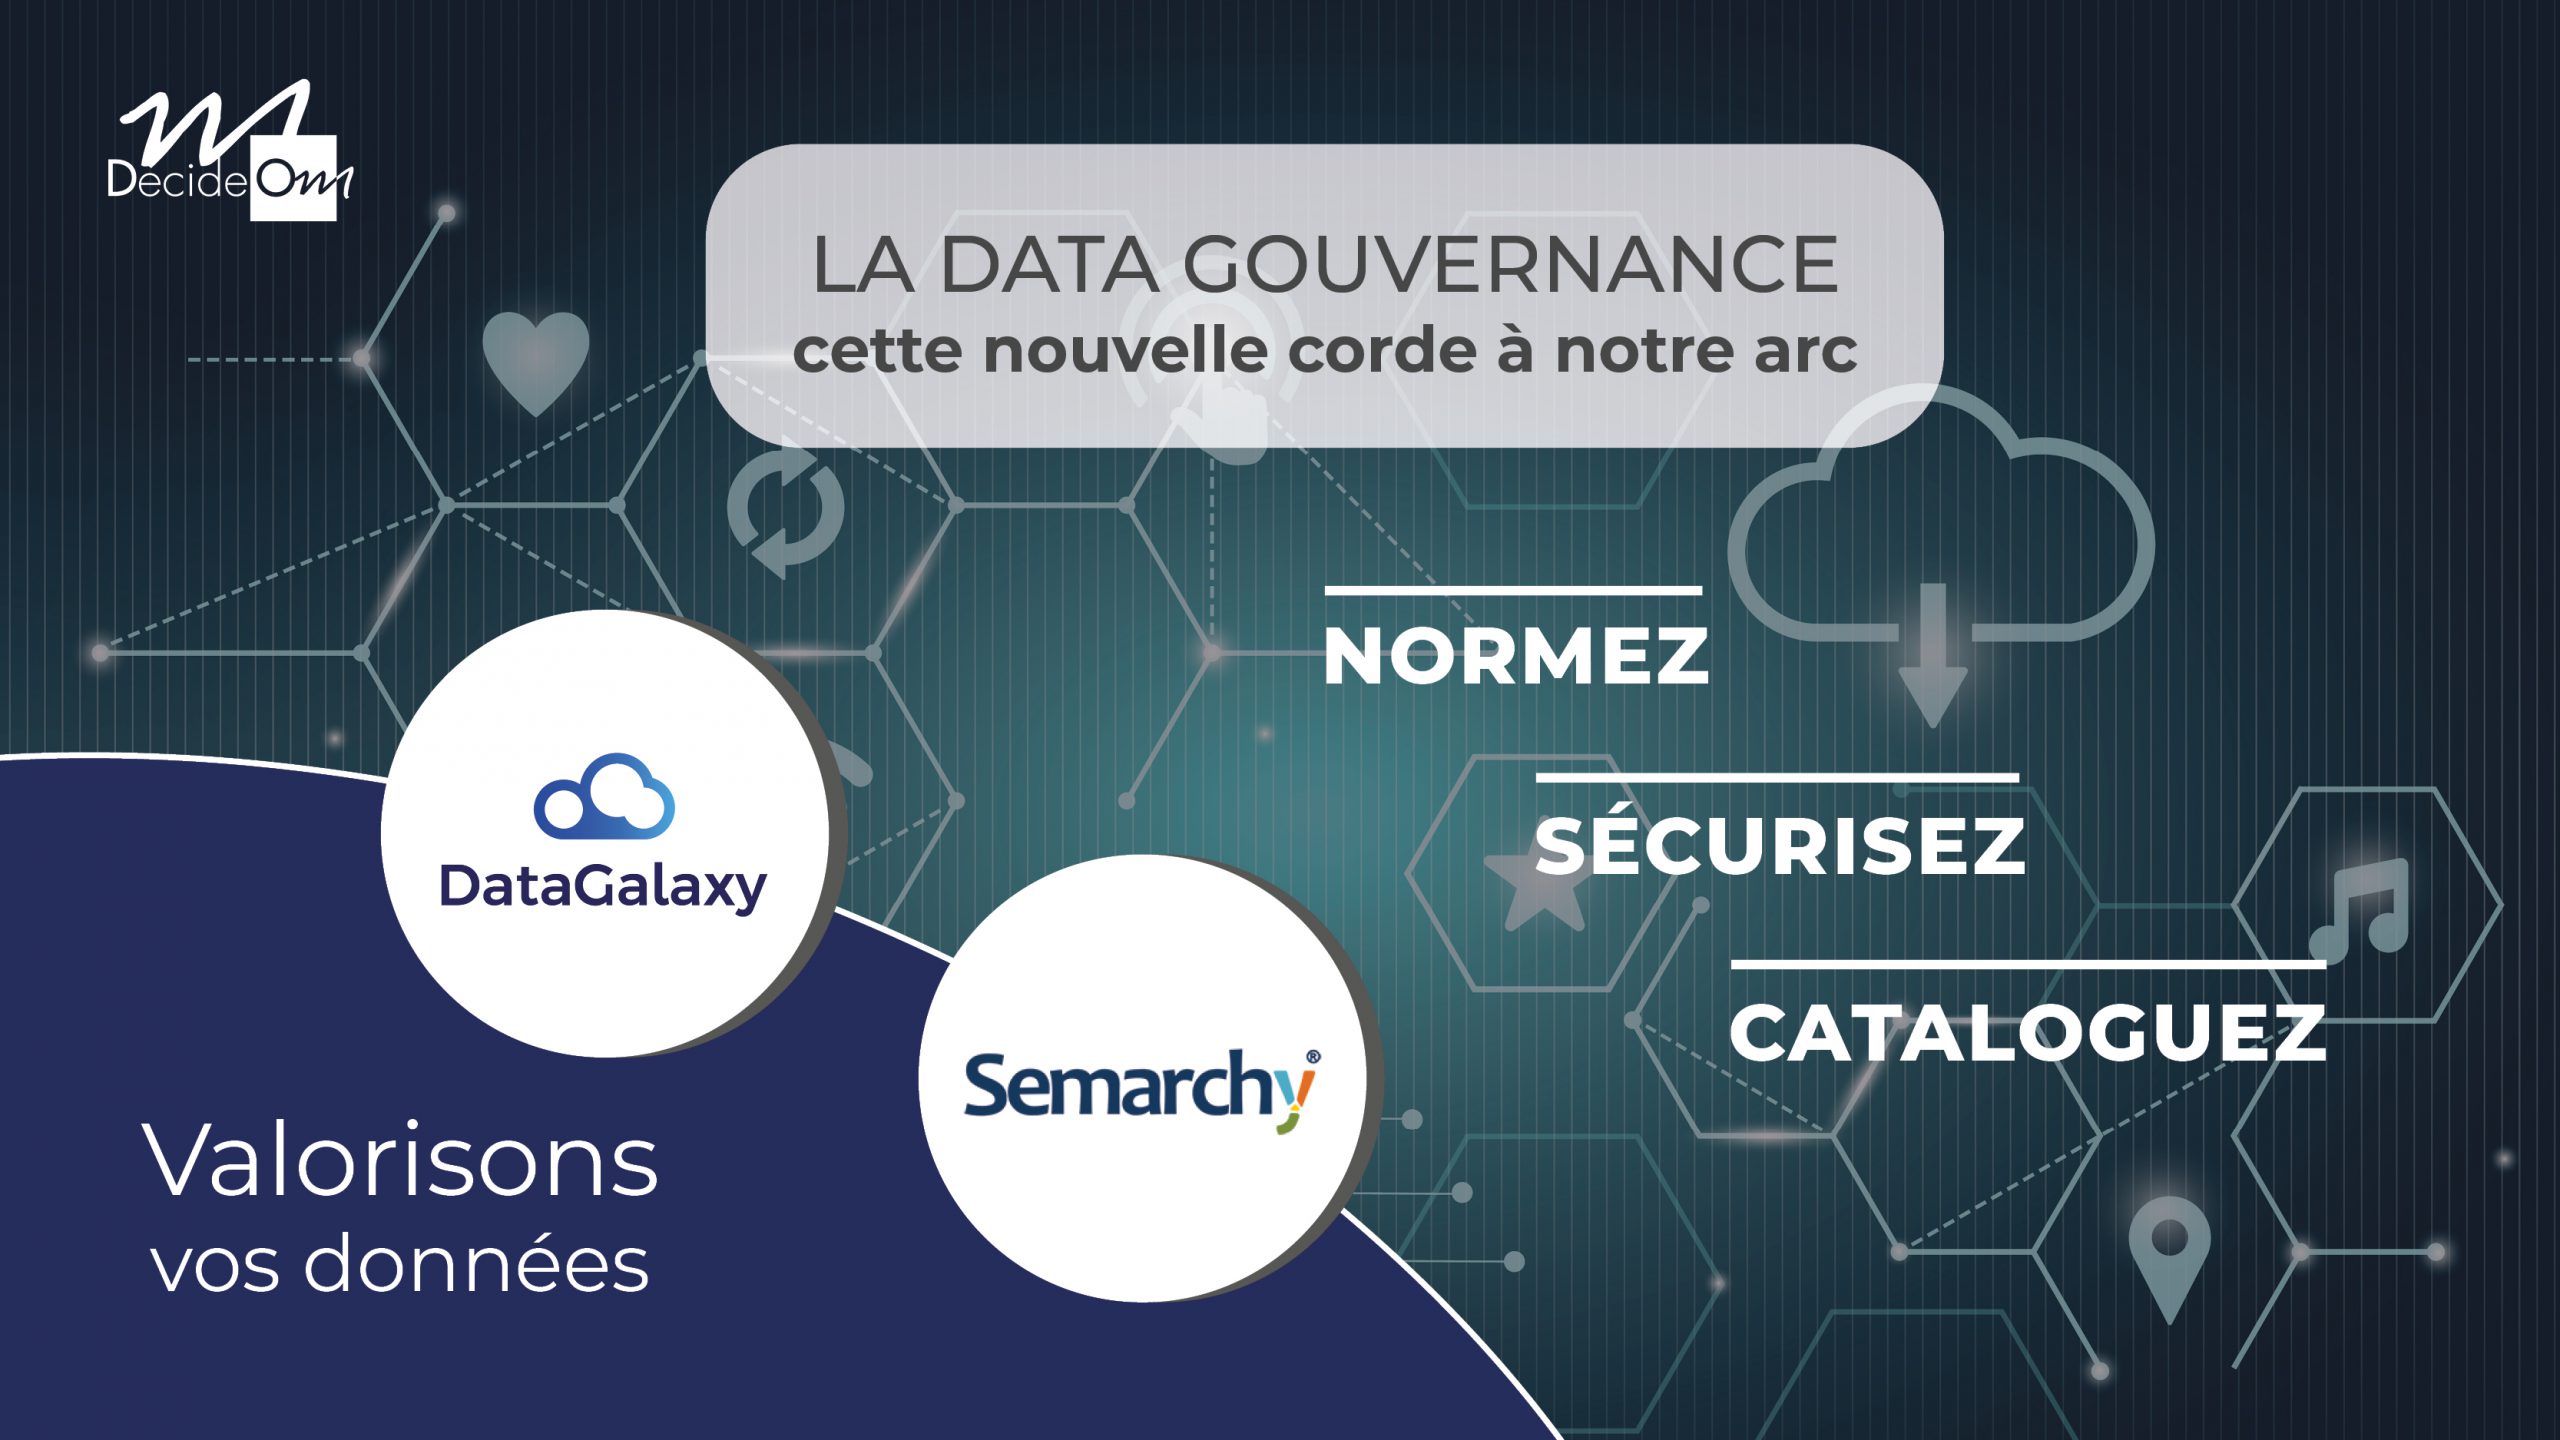 Data Gouvernance, Valorisons vos données, Semarchy, DataGalaxy